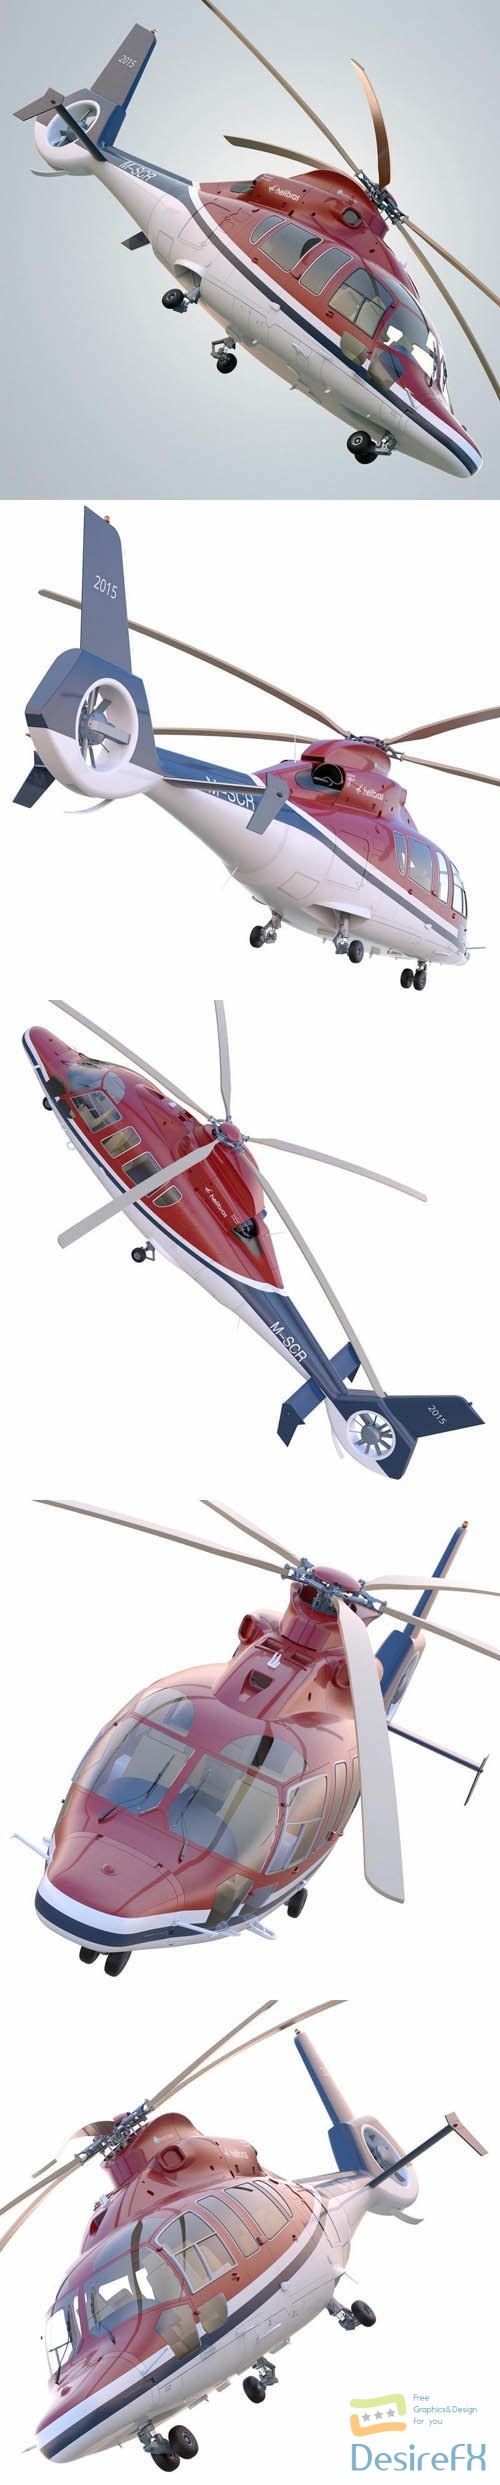 Eurocopter EC155 helicopter- 3d model